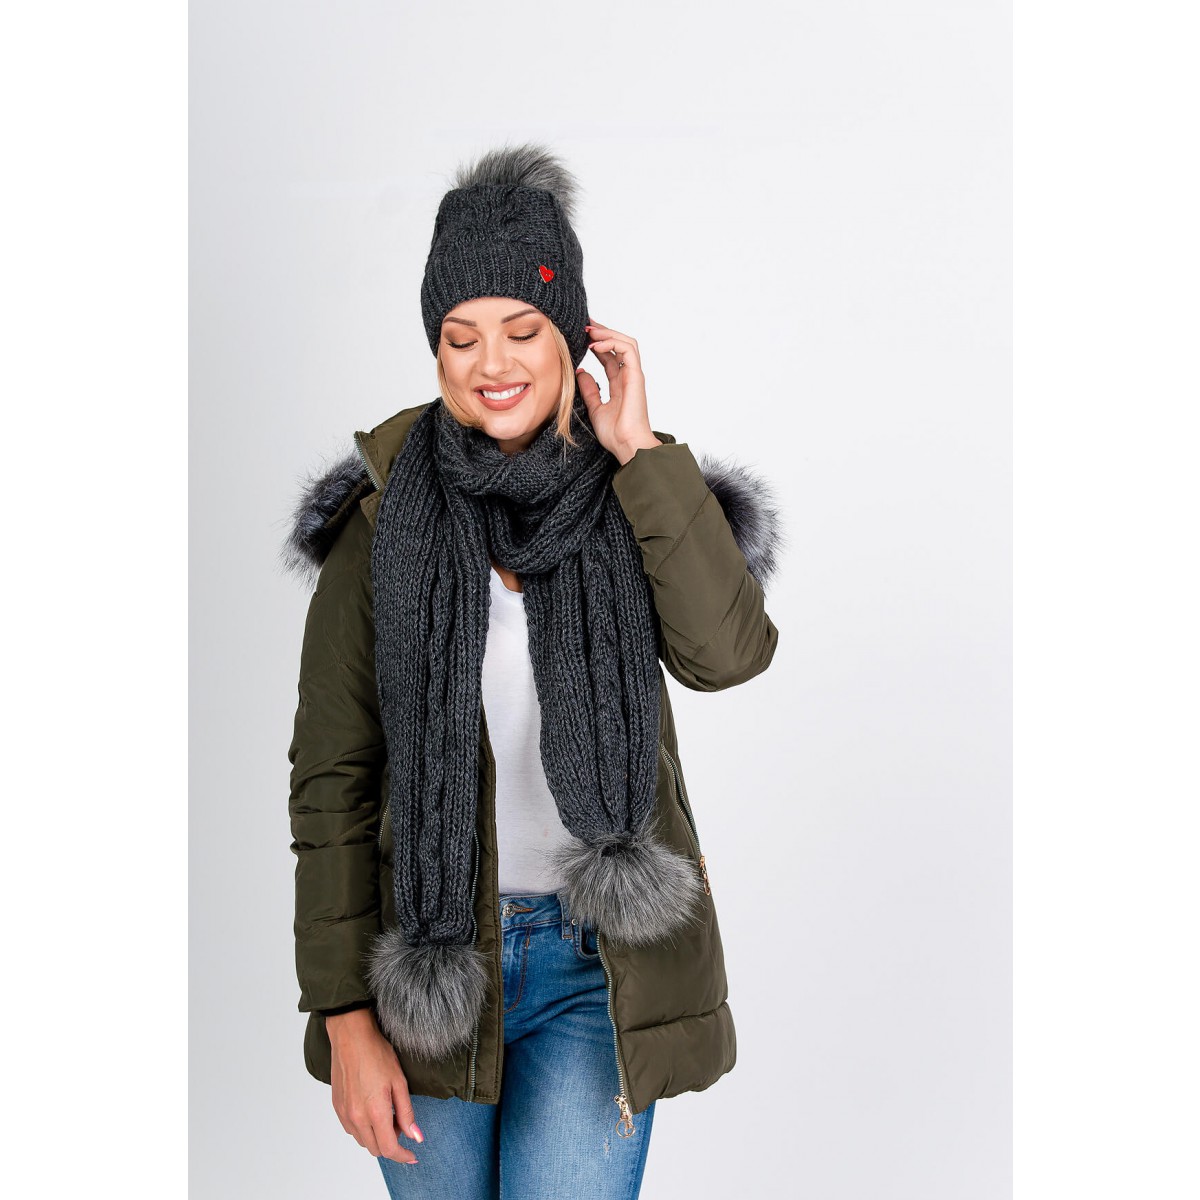 Women's winter set cap + scarf with pompoms - dark gray,